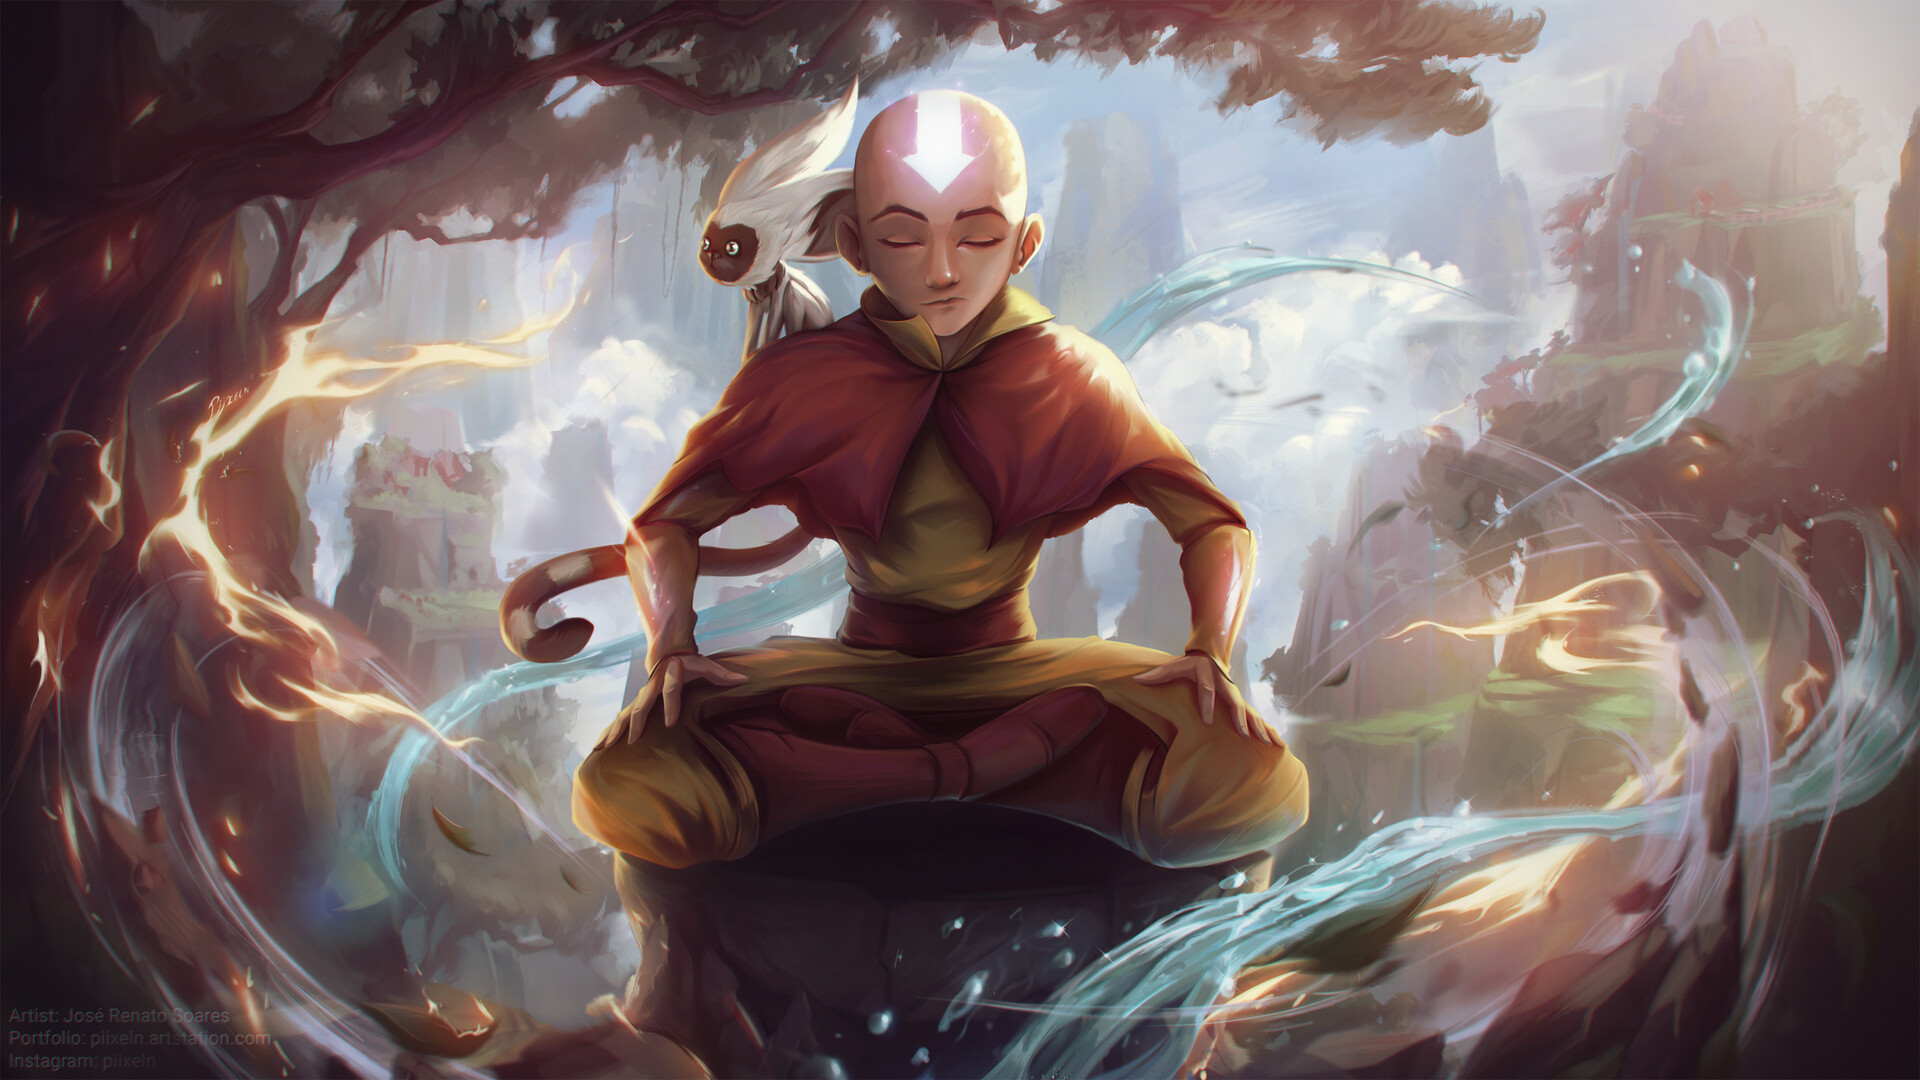 Avatar: The Last Airbender - Aang and Momo by José Renato Soares